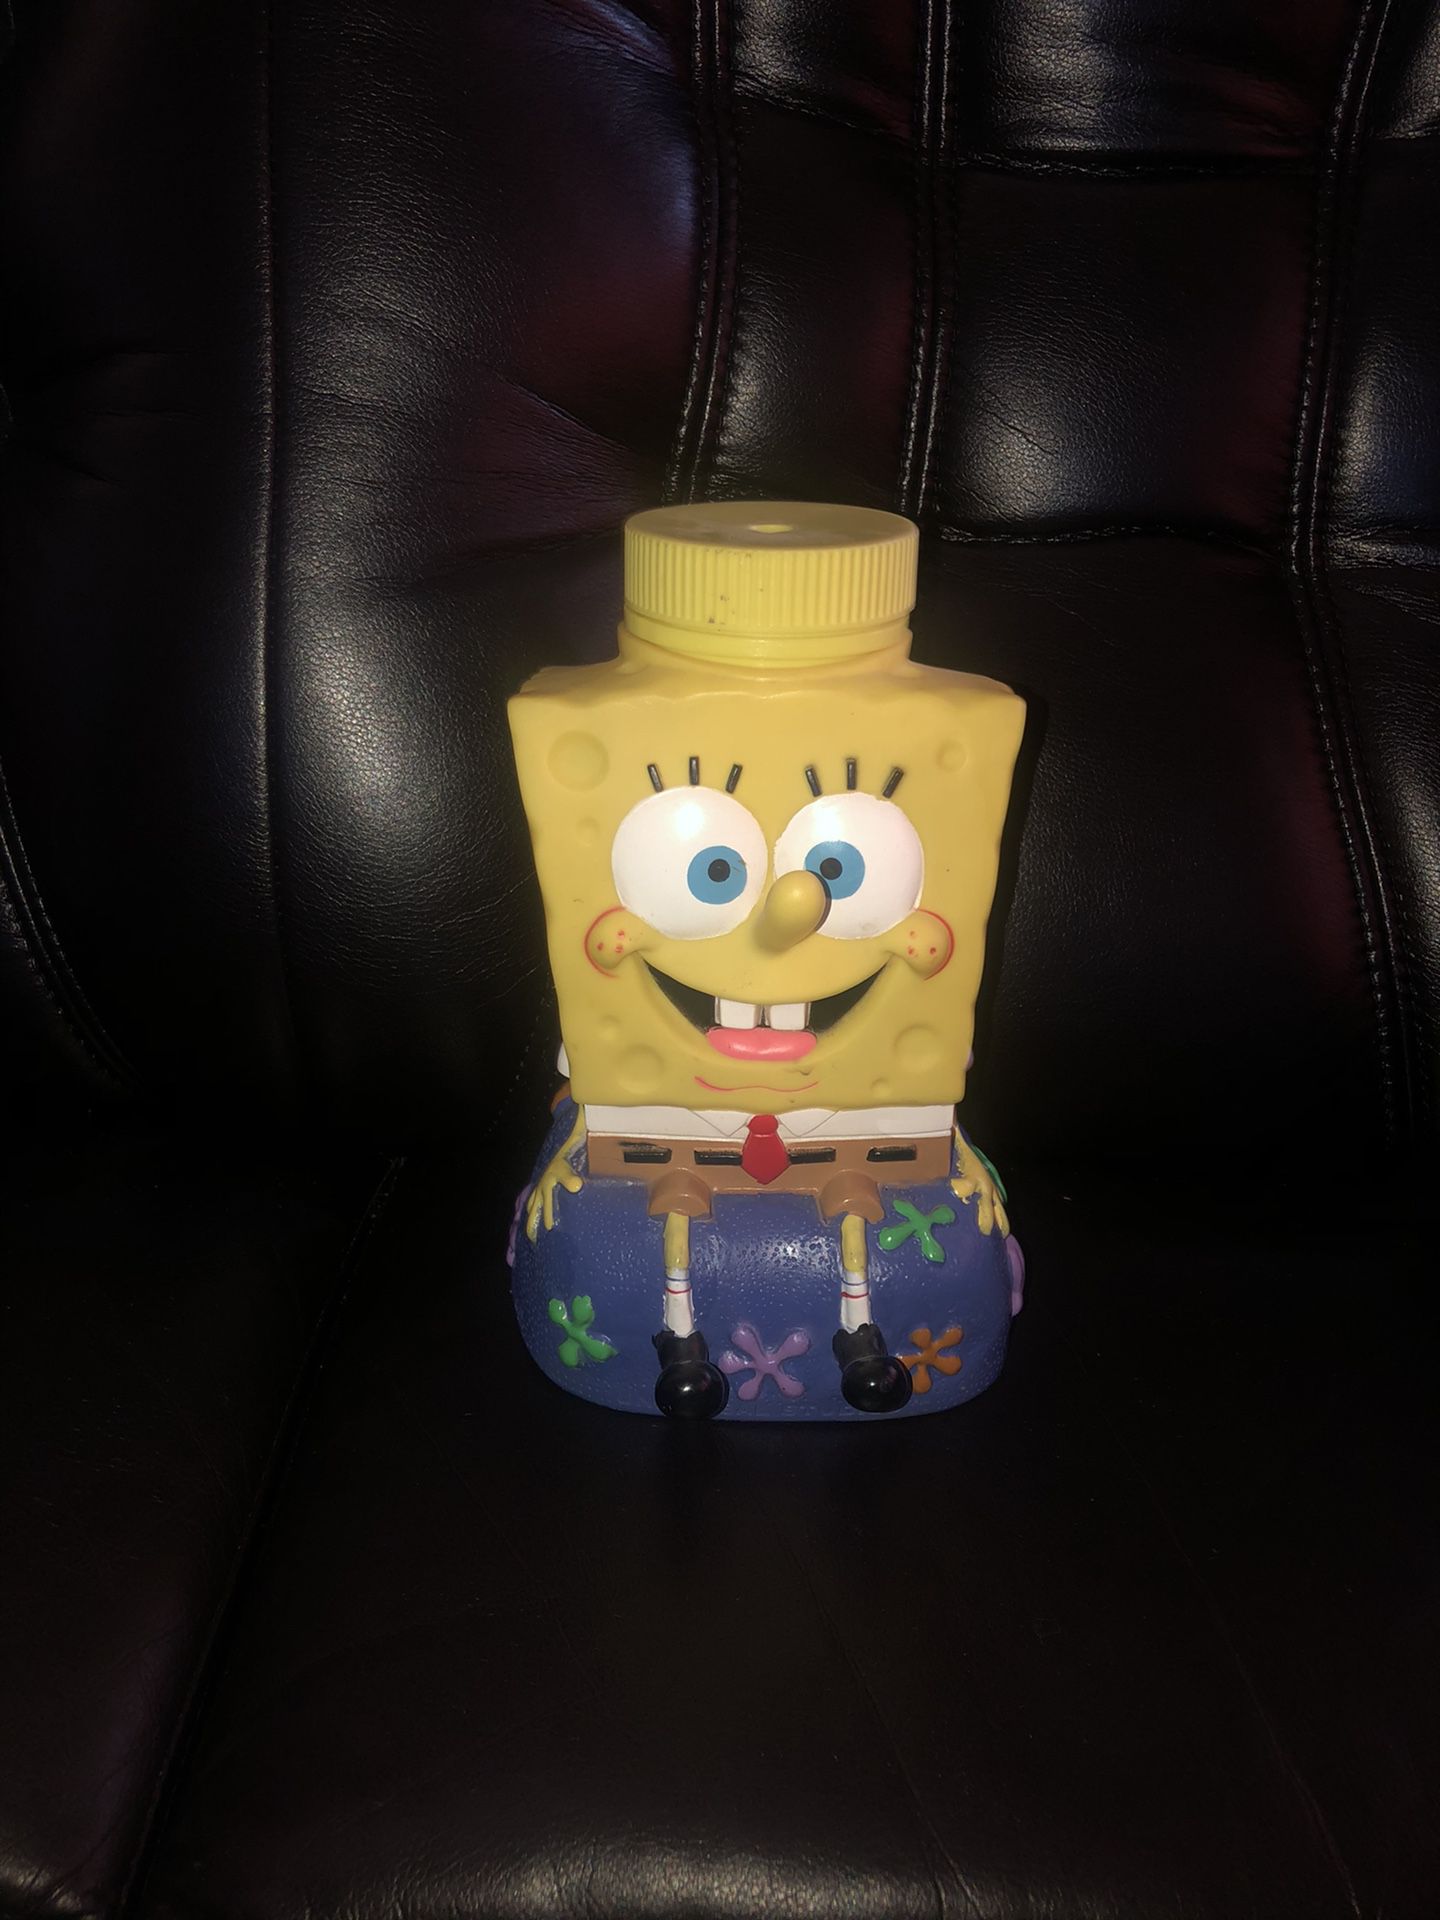 2002 SpongeBob SquarePants Universal Studios Viacom Drinking Cup Figure